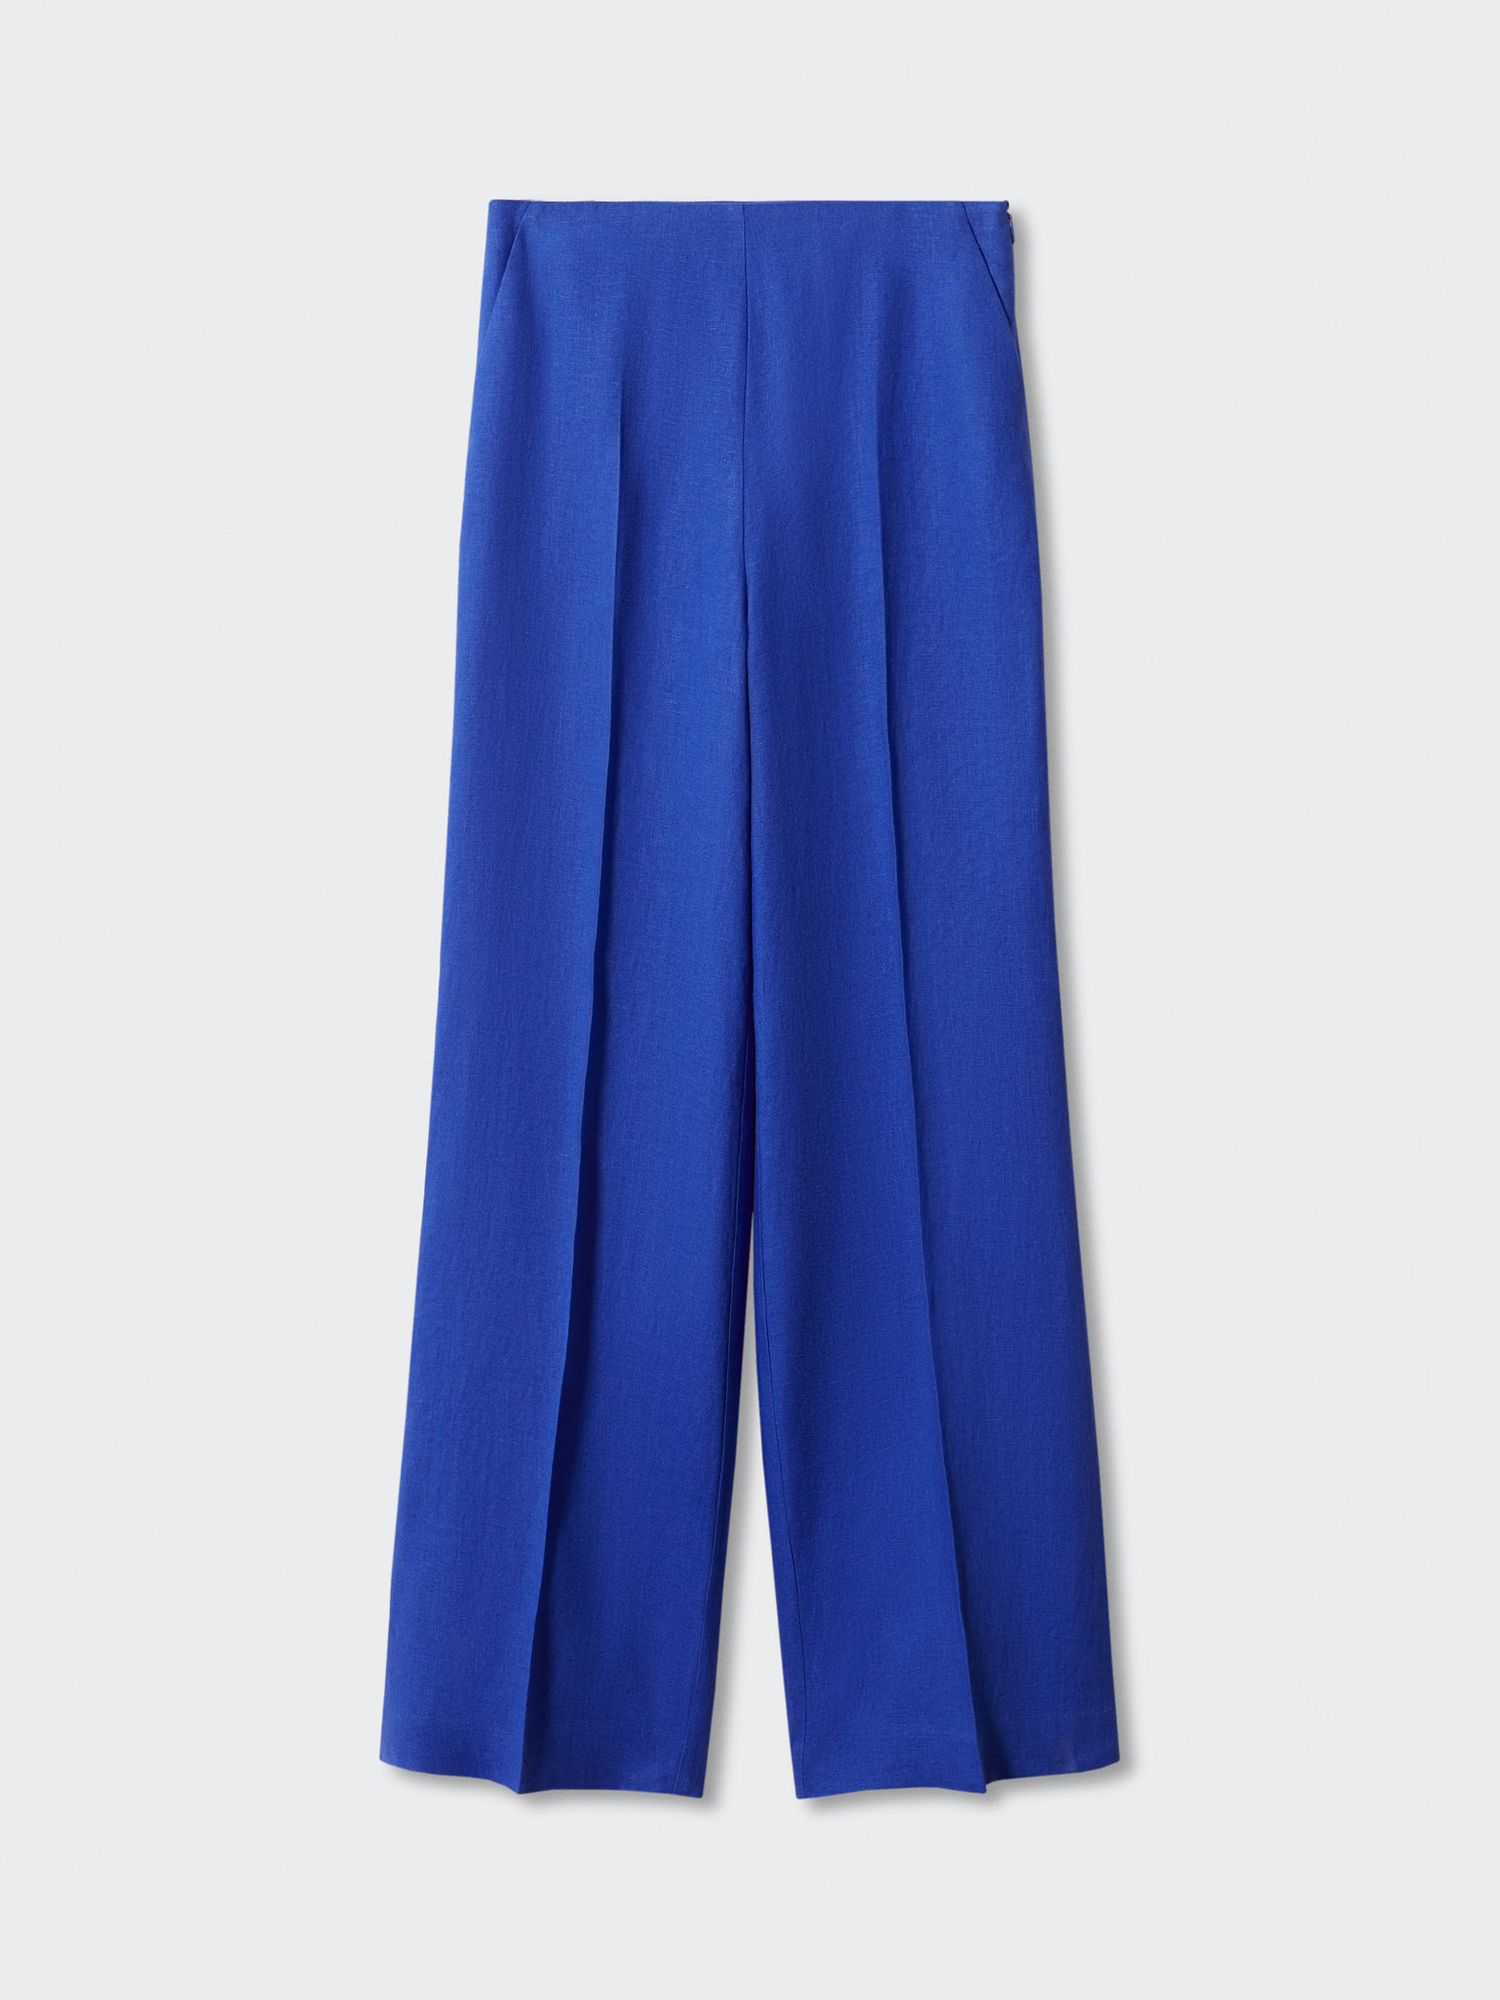 Mango Linet Linen Blend Trousers, Medium Blue at John Lewis & Partners